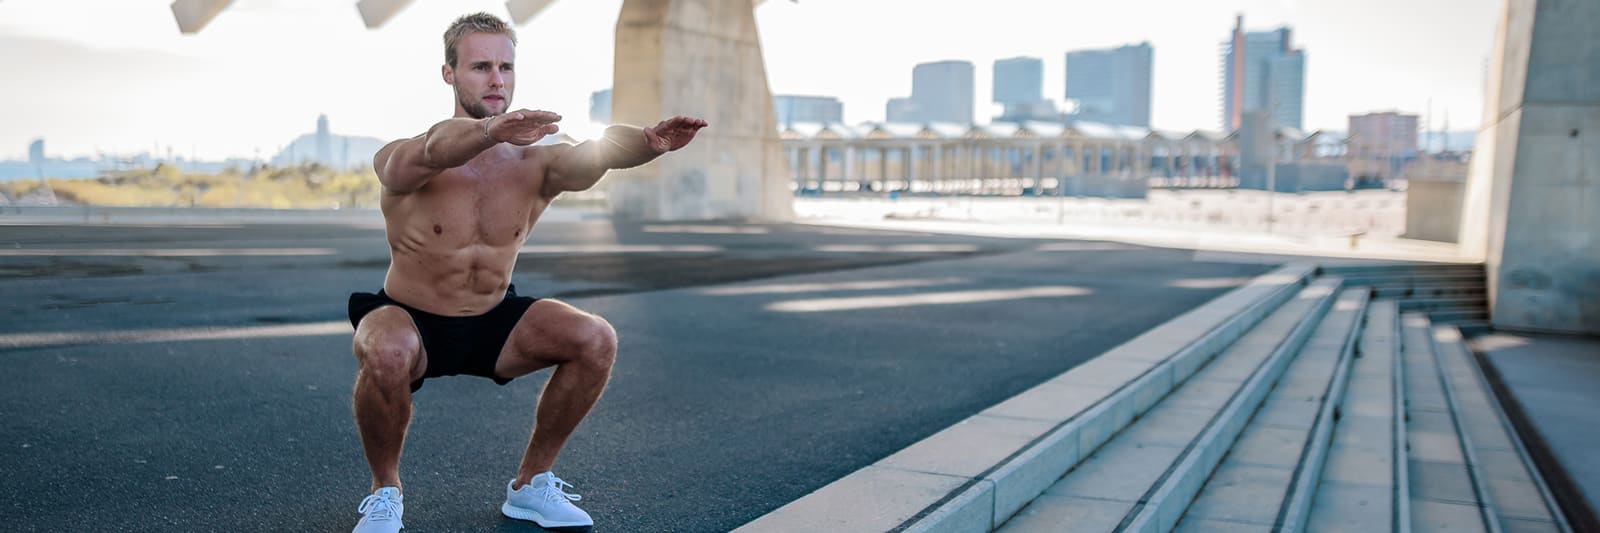 Running. Comment faire pour augmenter sa force musculaire ?